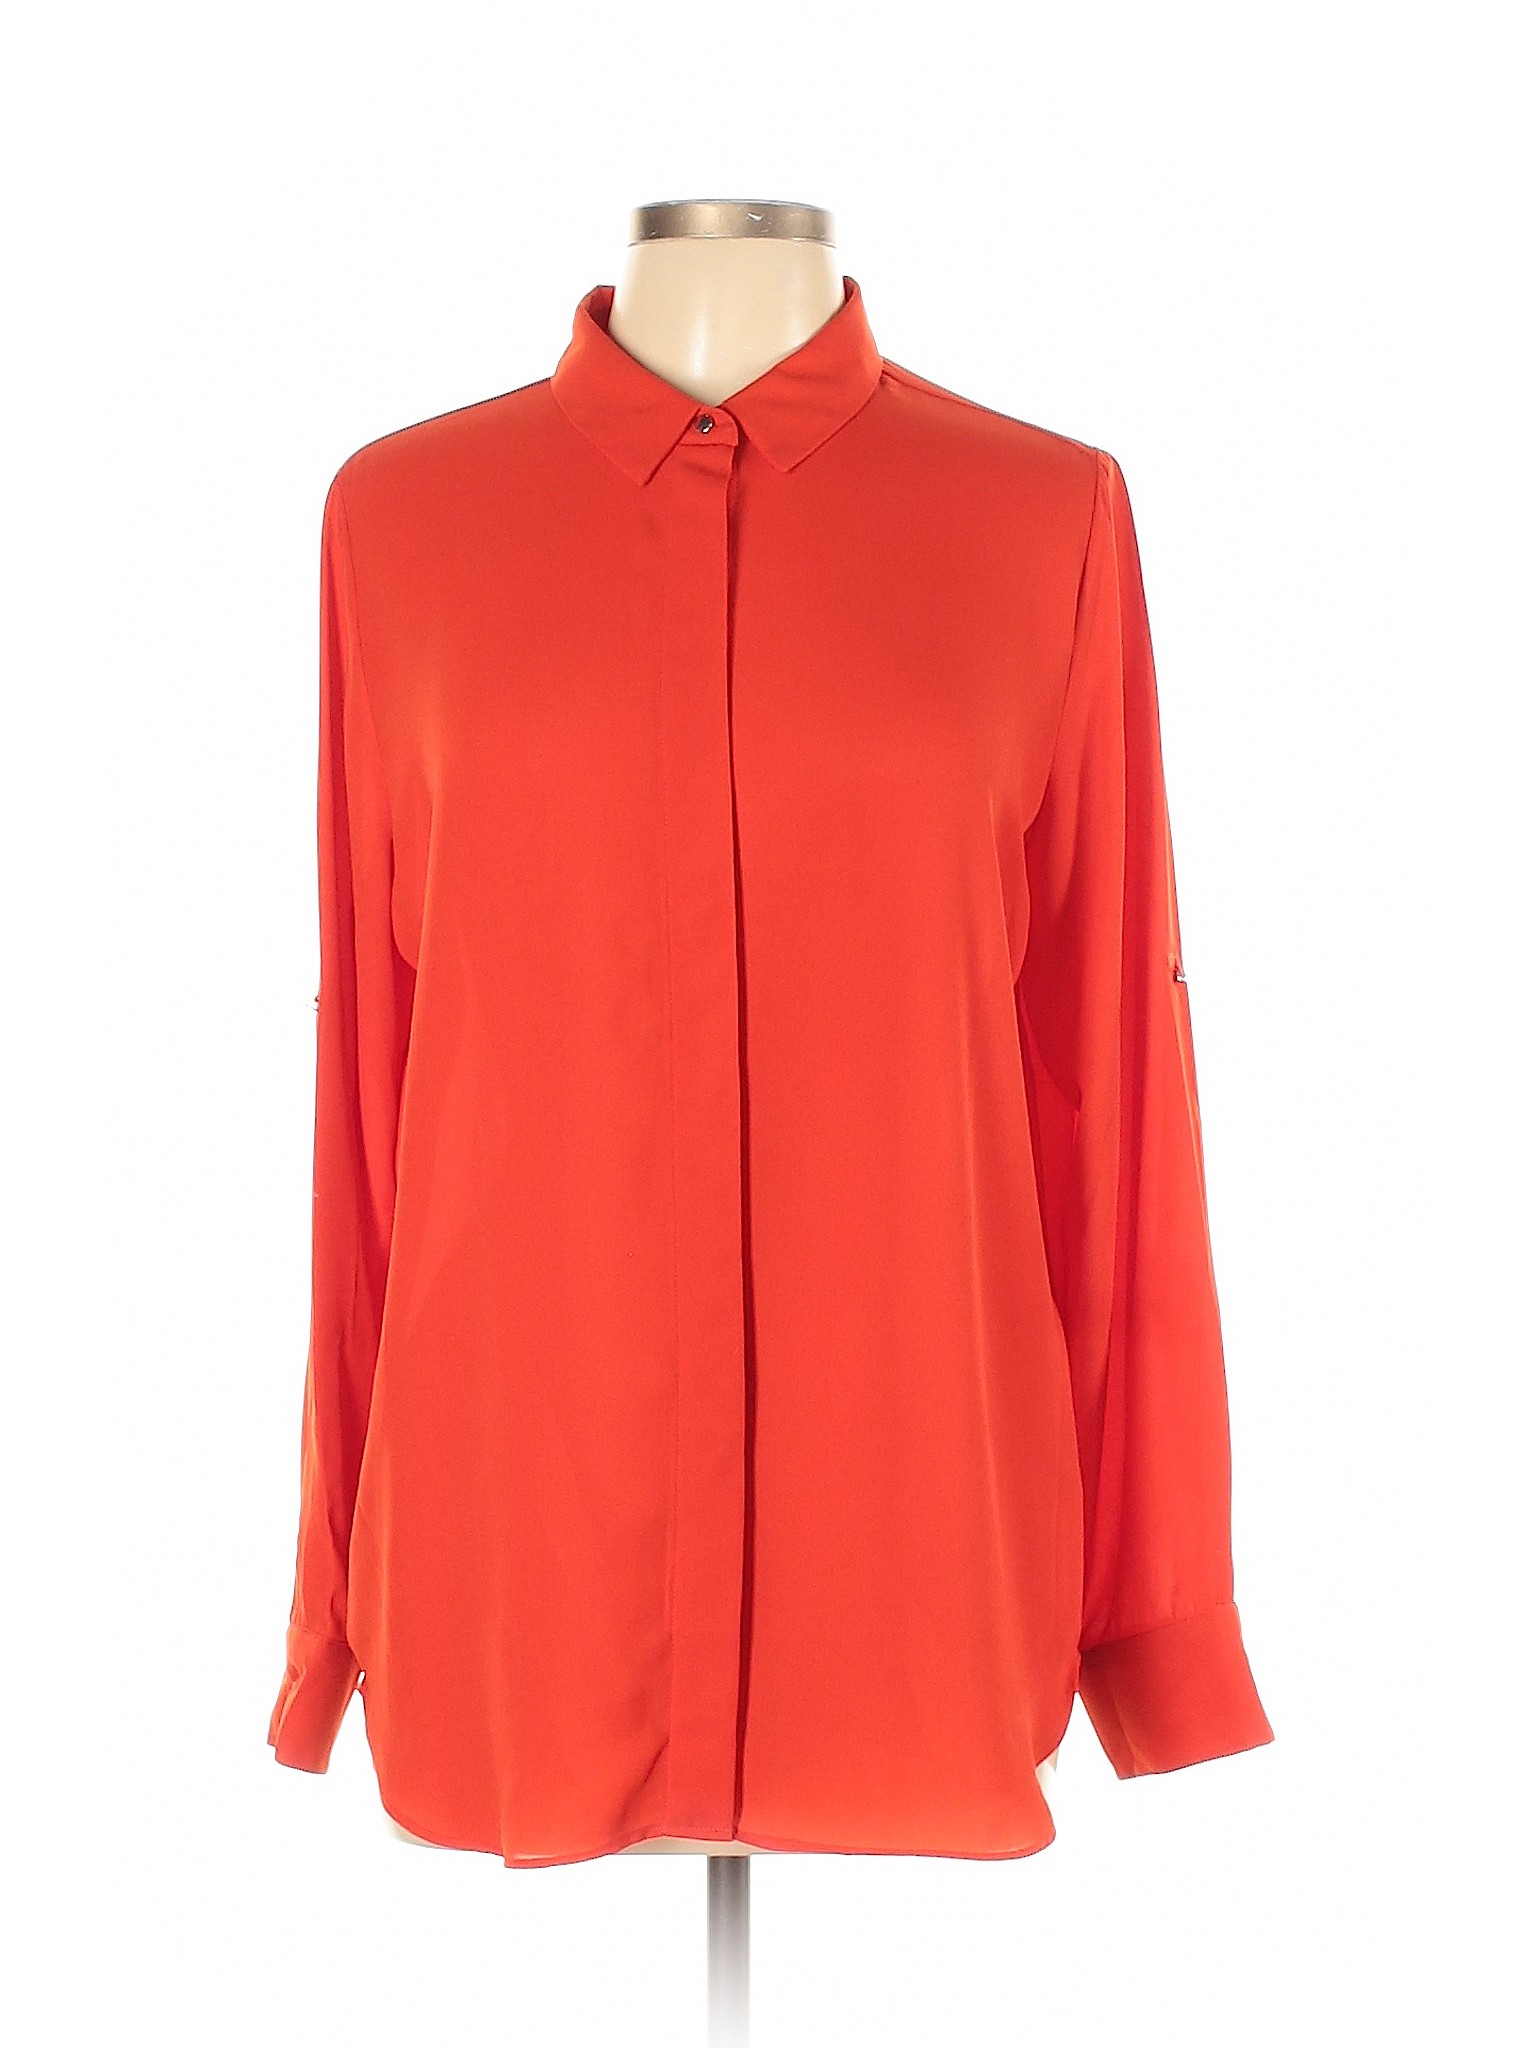 Mossimo Women Orange Long Sleeve Blouse L | eBay